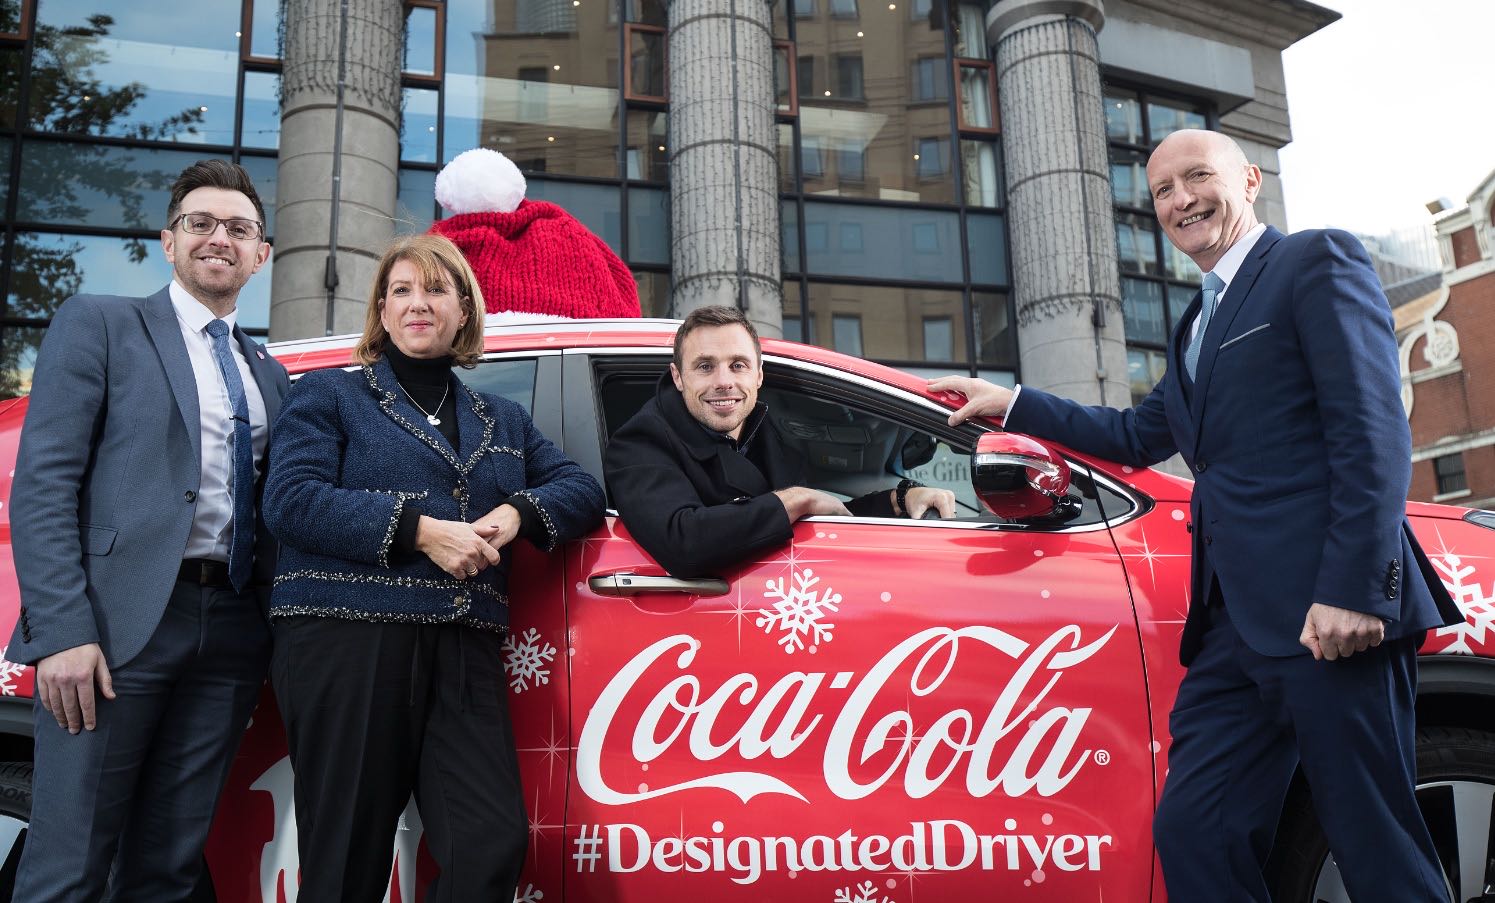 Coca Cola Designated Driver Campaign Underway